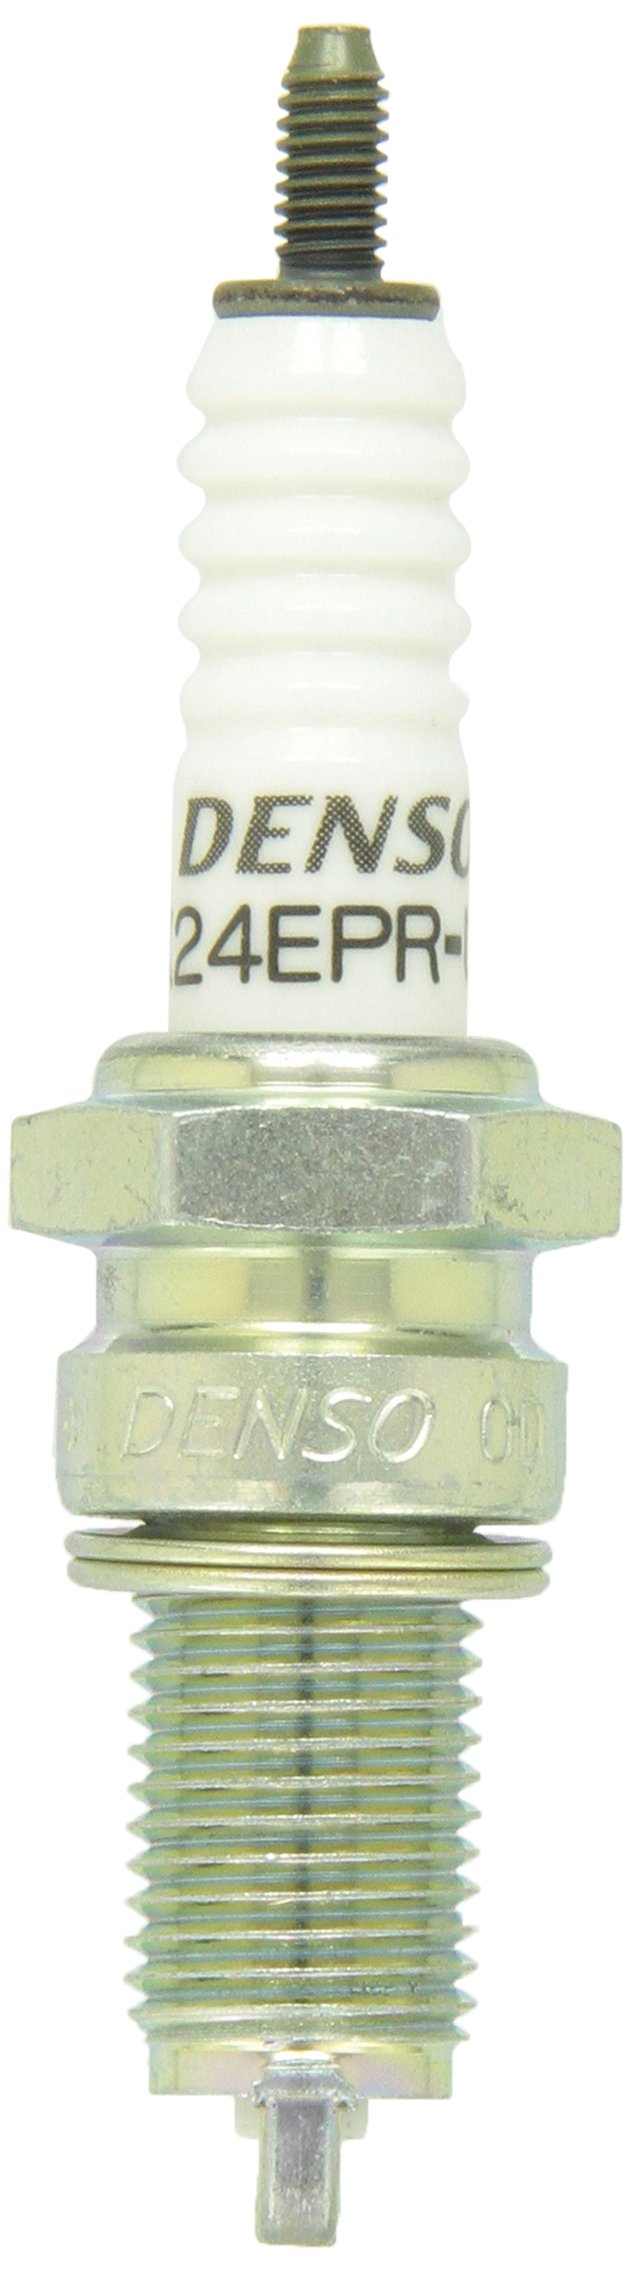 DENSO X24EPR-U9 Zündkerze von Denso